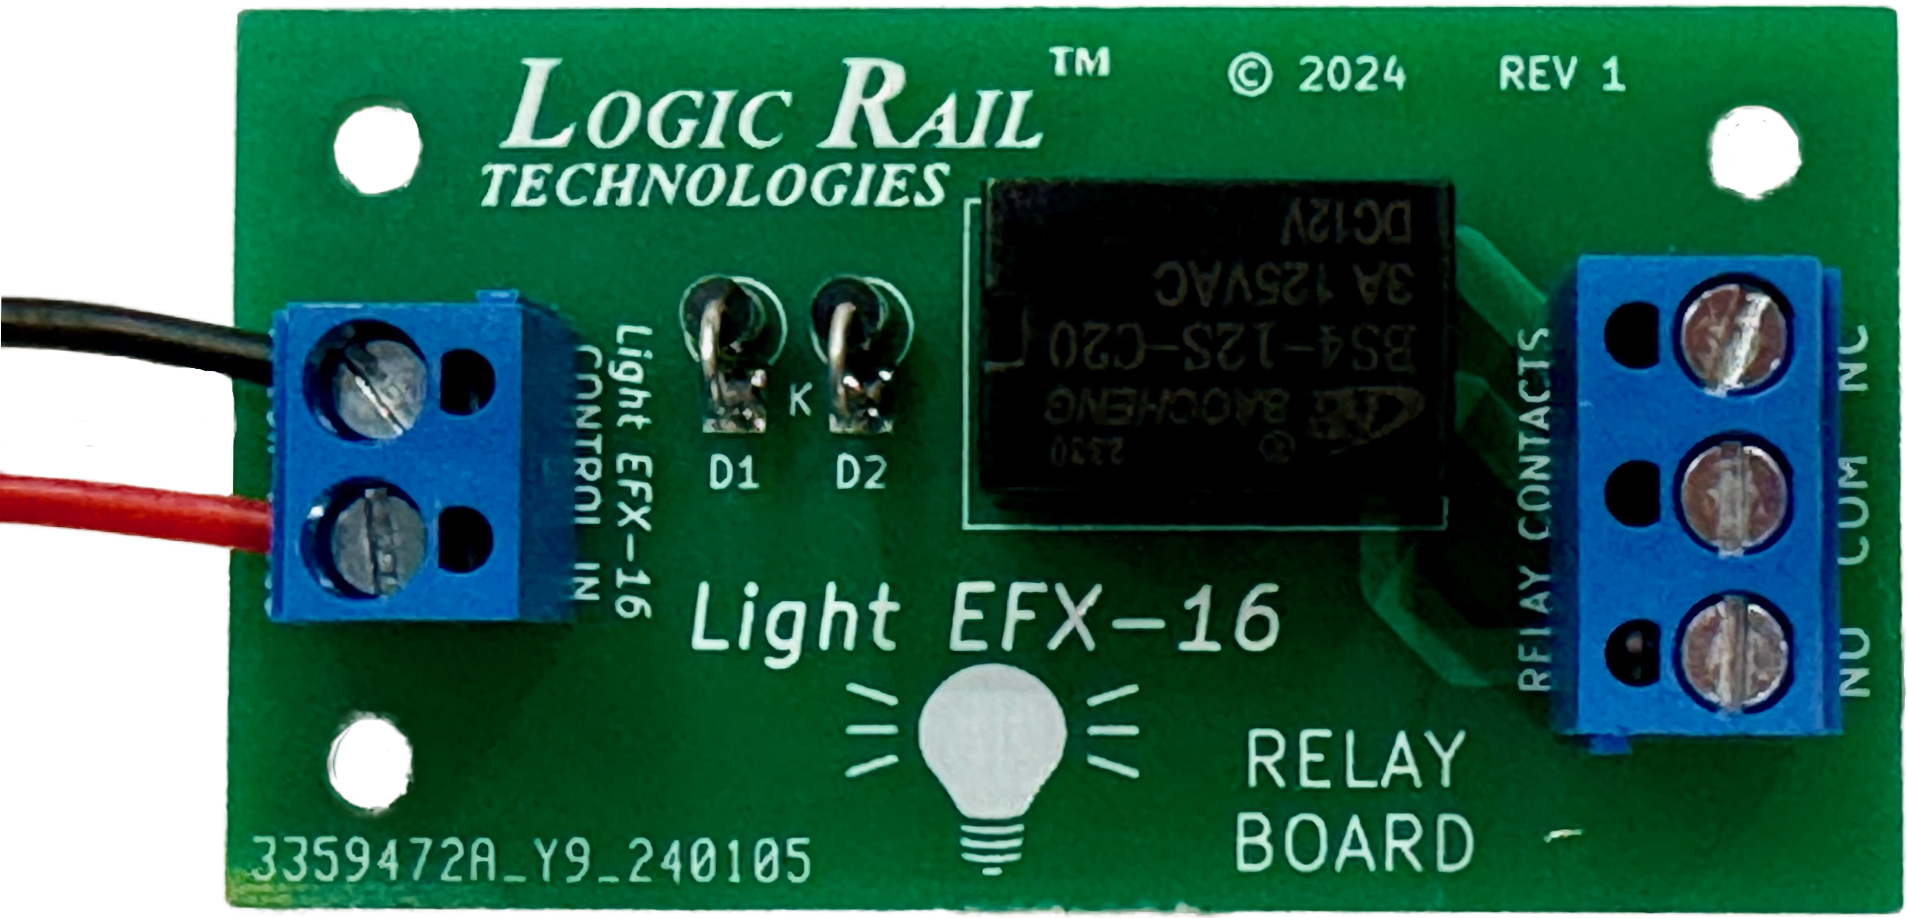 Light EFX-16 relay board